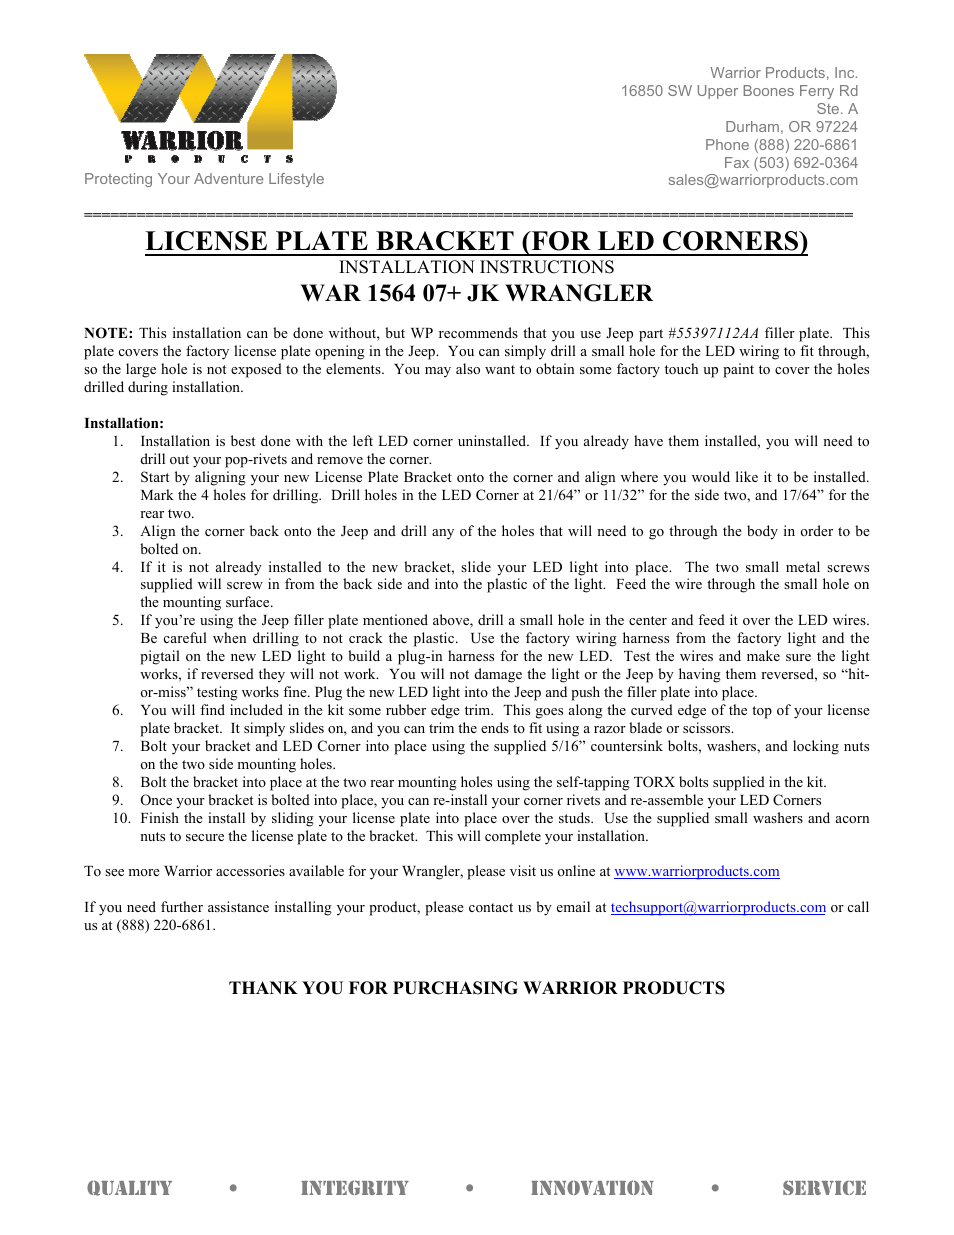 1564 LICENSE PLATE BRACKET (FOR LED CORNERS) (2007 – 2013 Jeep JK Wrangler)